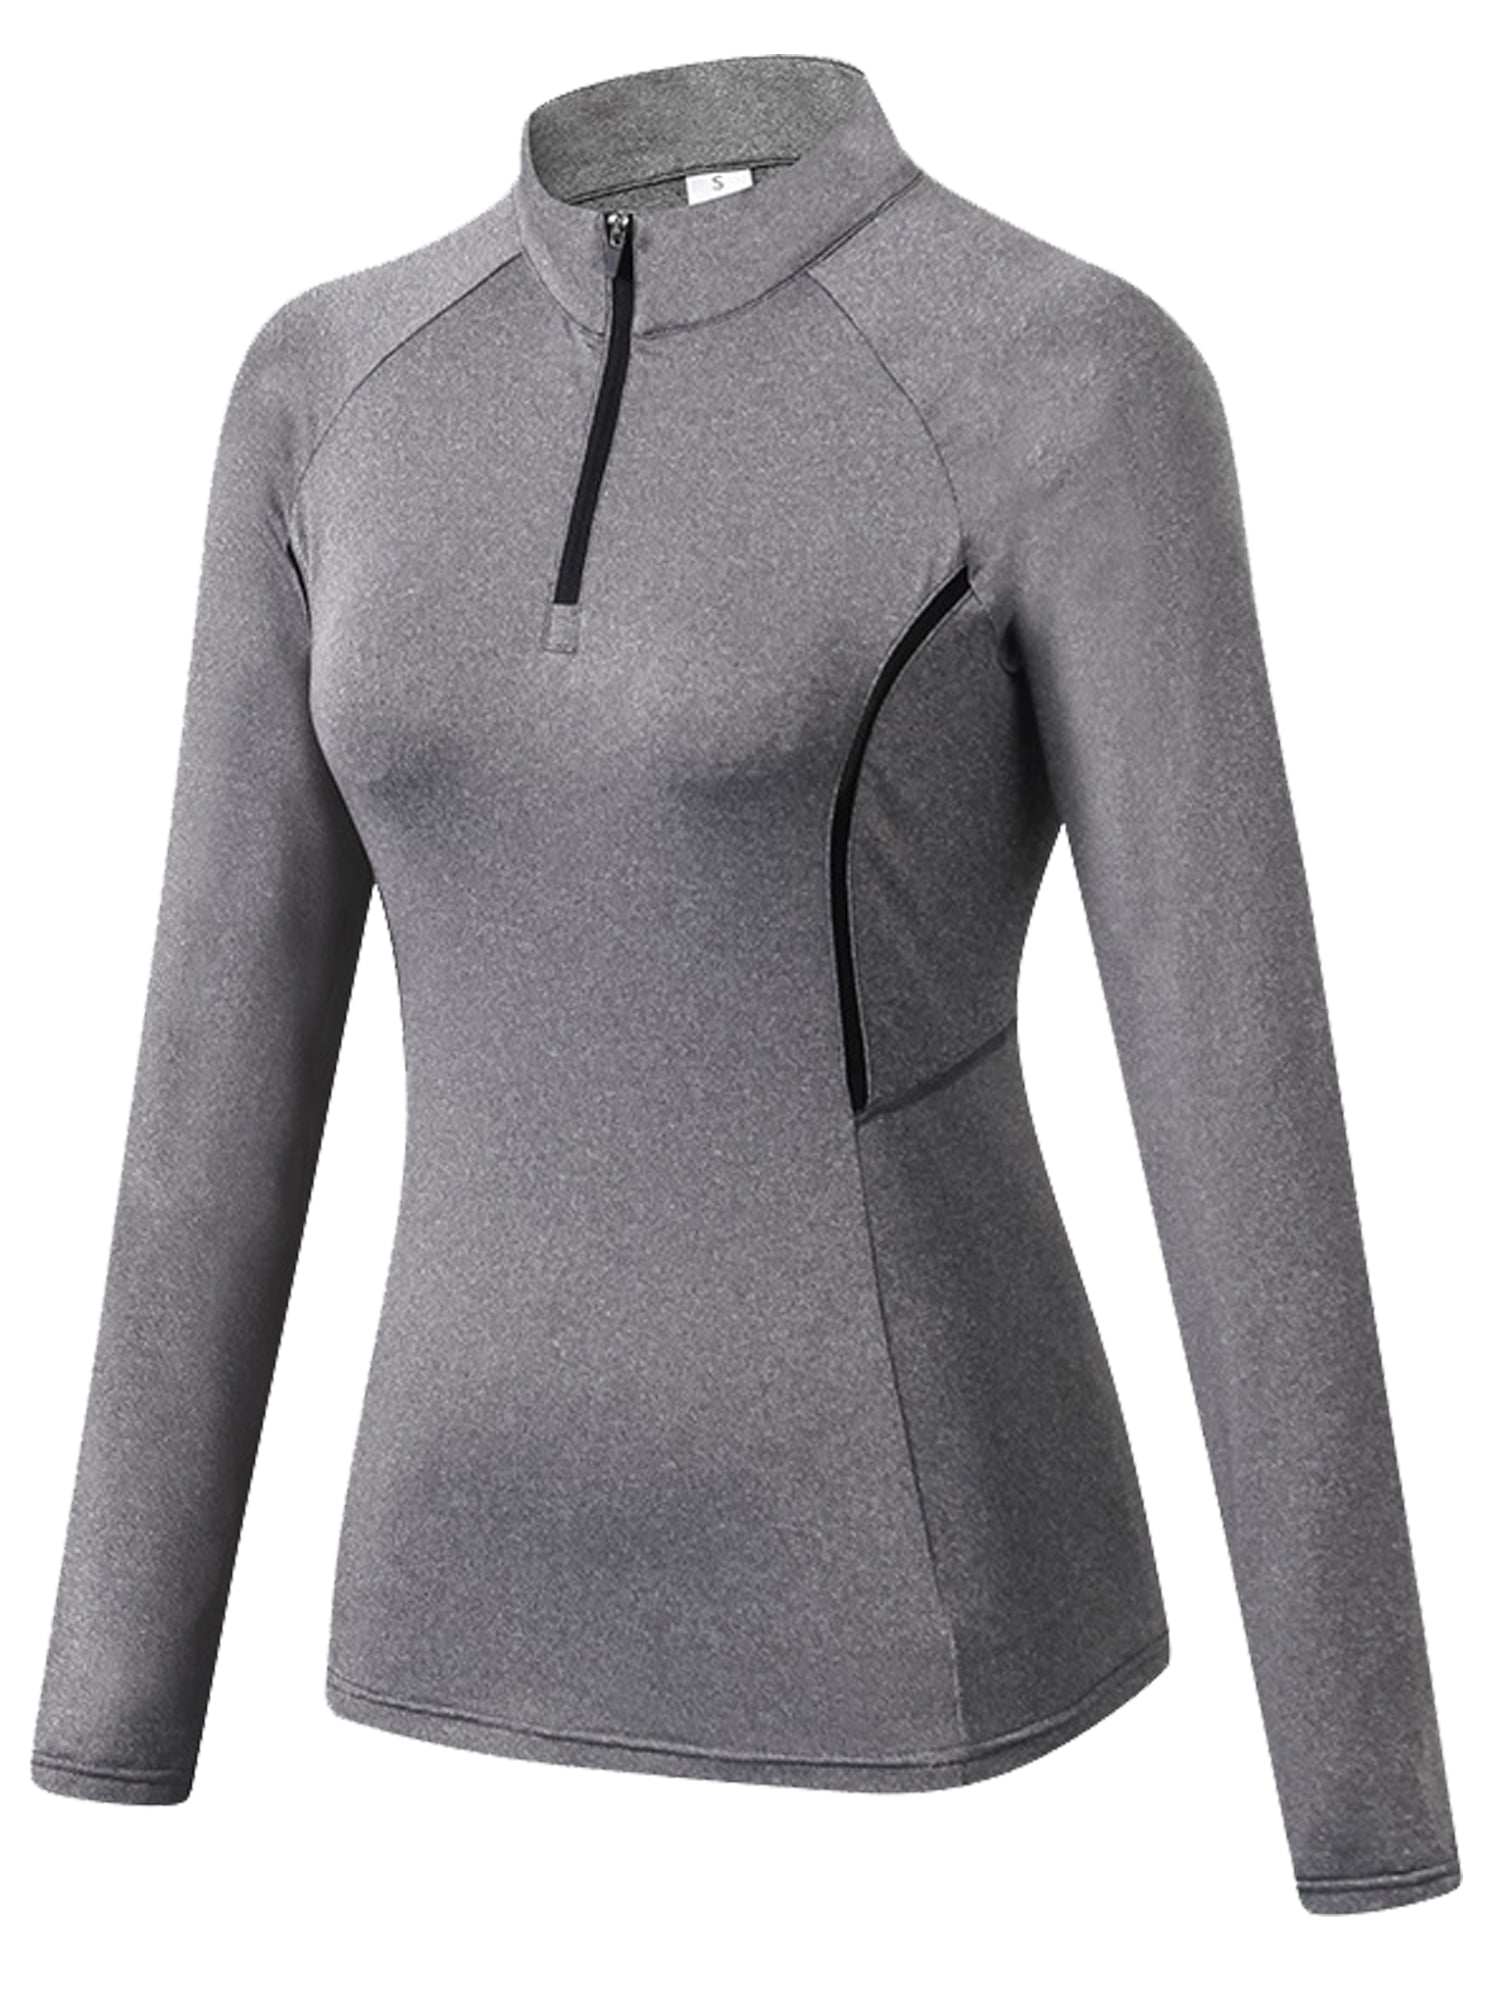 Women's Mock Neck Thermal 1/4 Zip Shirts Tops Base Layer Sports Gym Yoga Wicking 